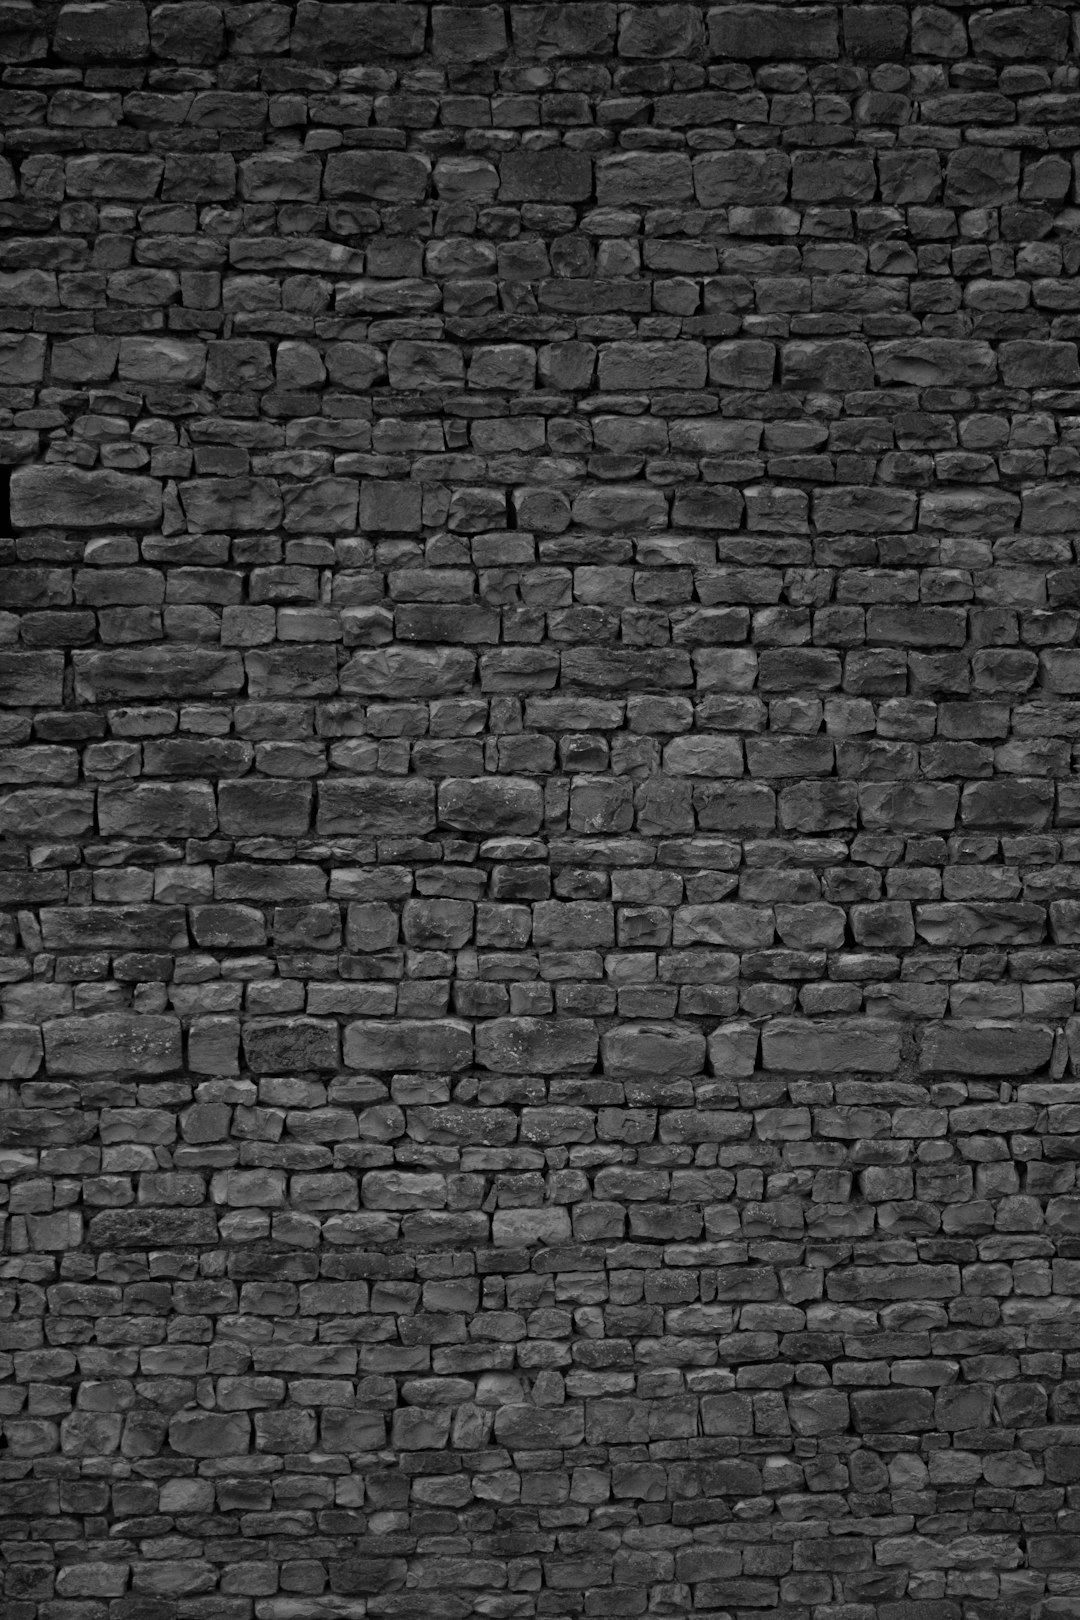 black and white brick wall